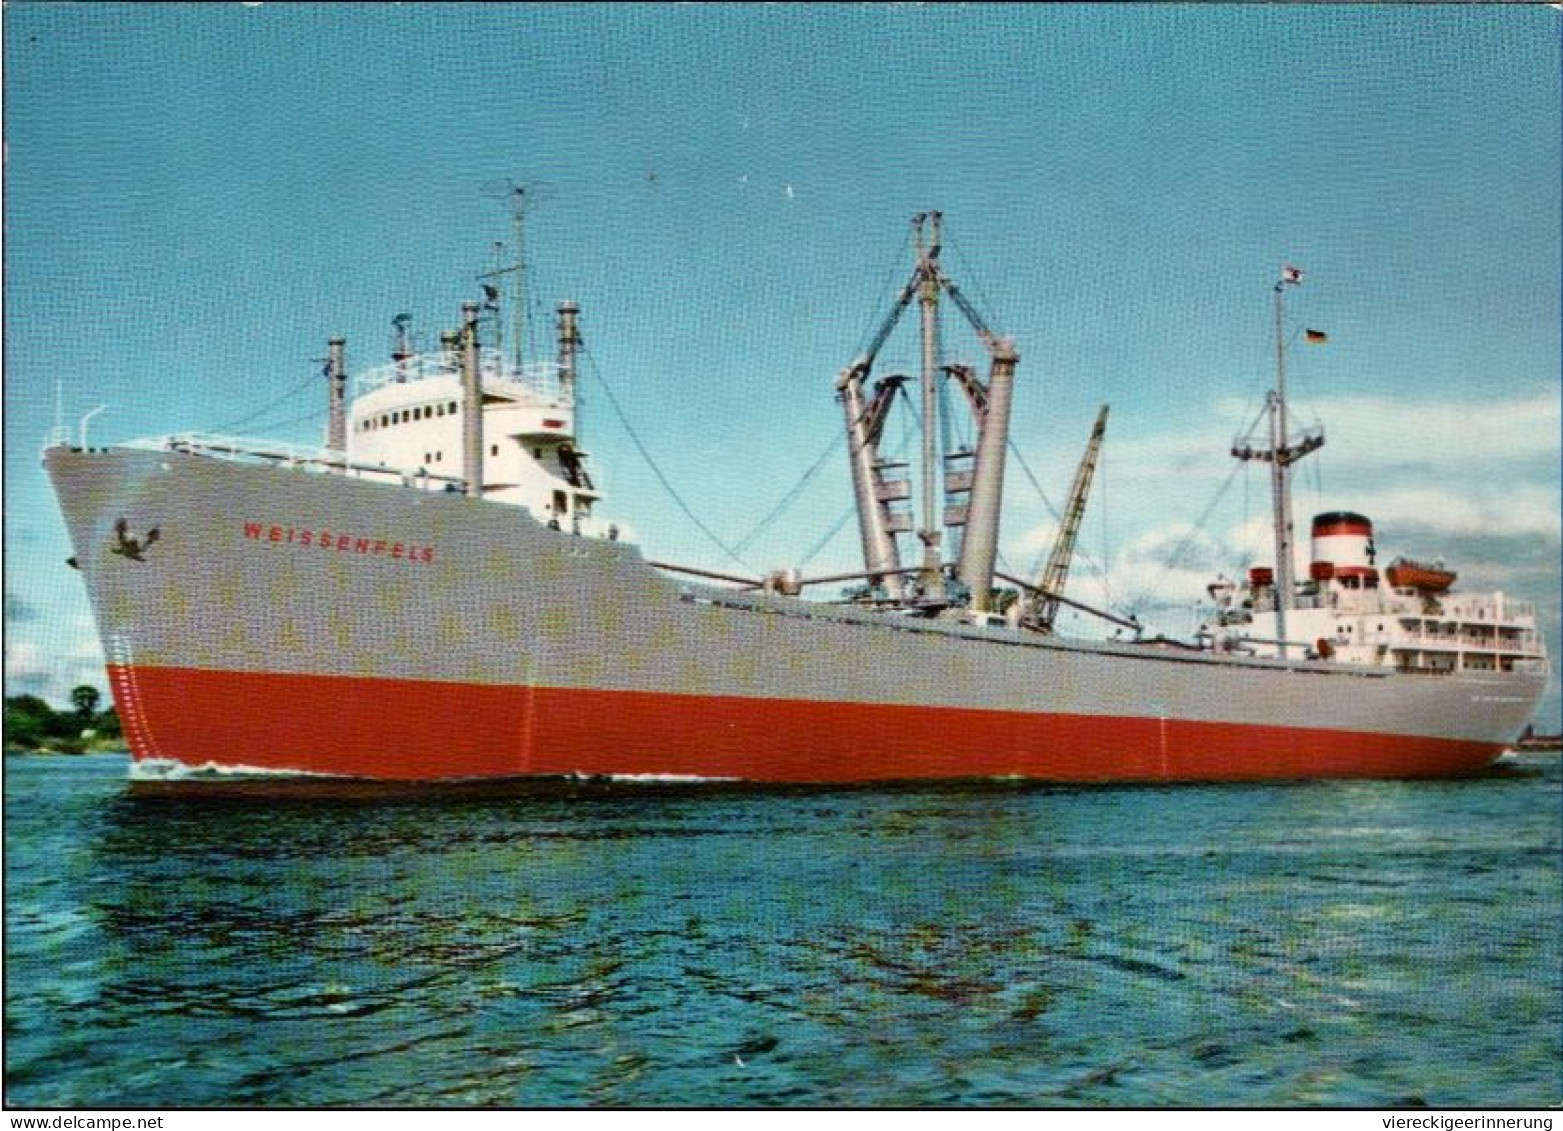 ! Ansichtskarte Ship, DDSG Hansa Bremen, Schiff MS Weissenfels, Frachter - Handel